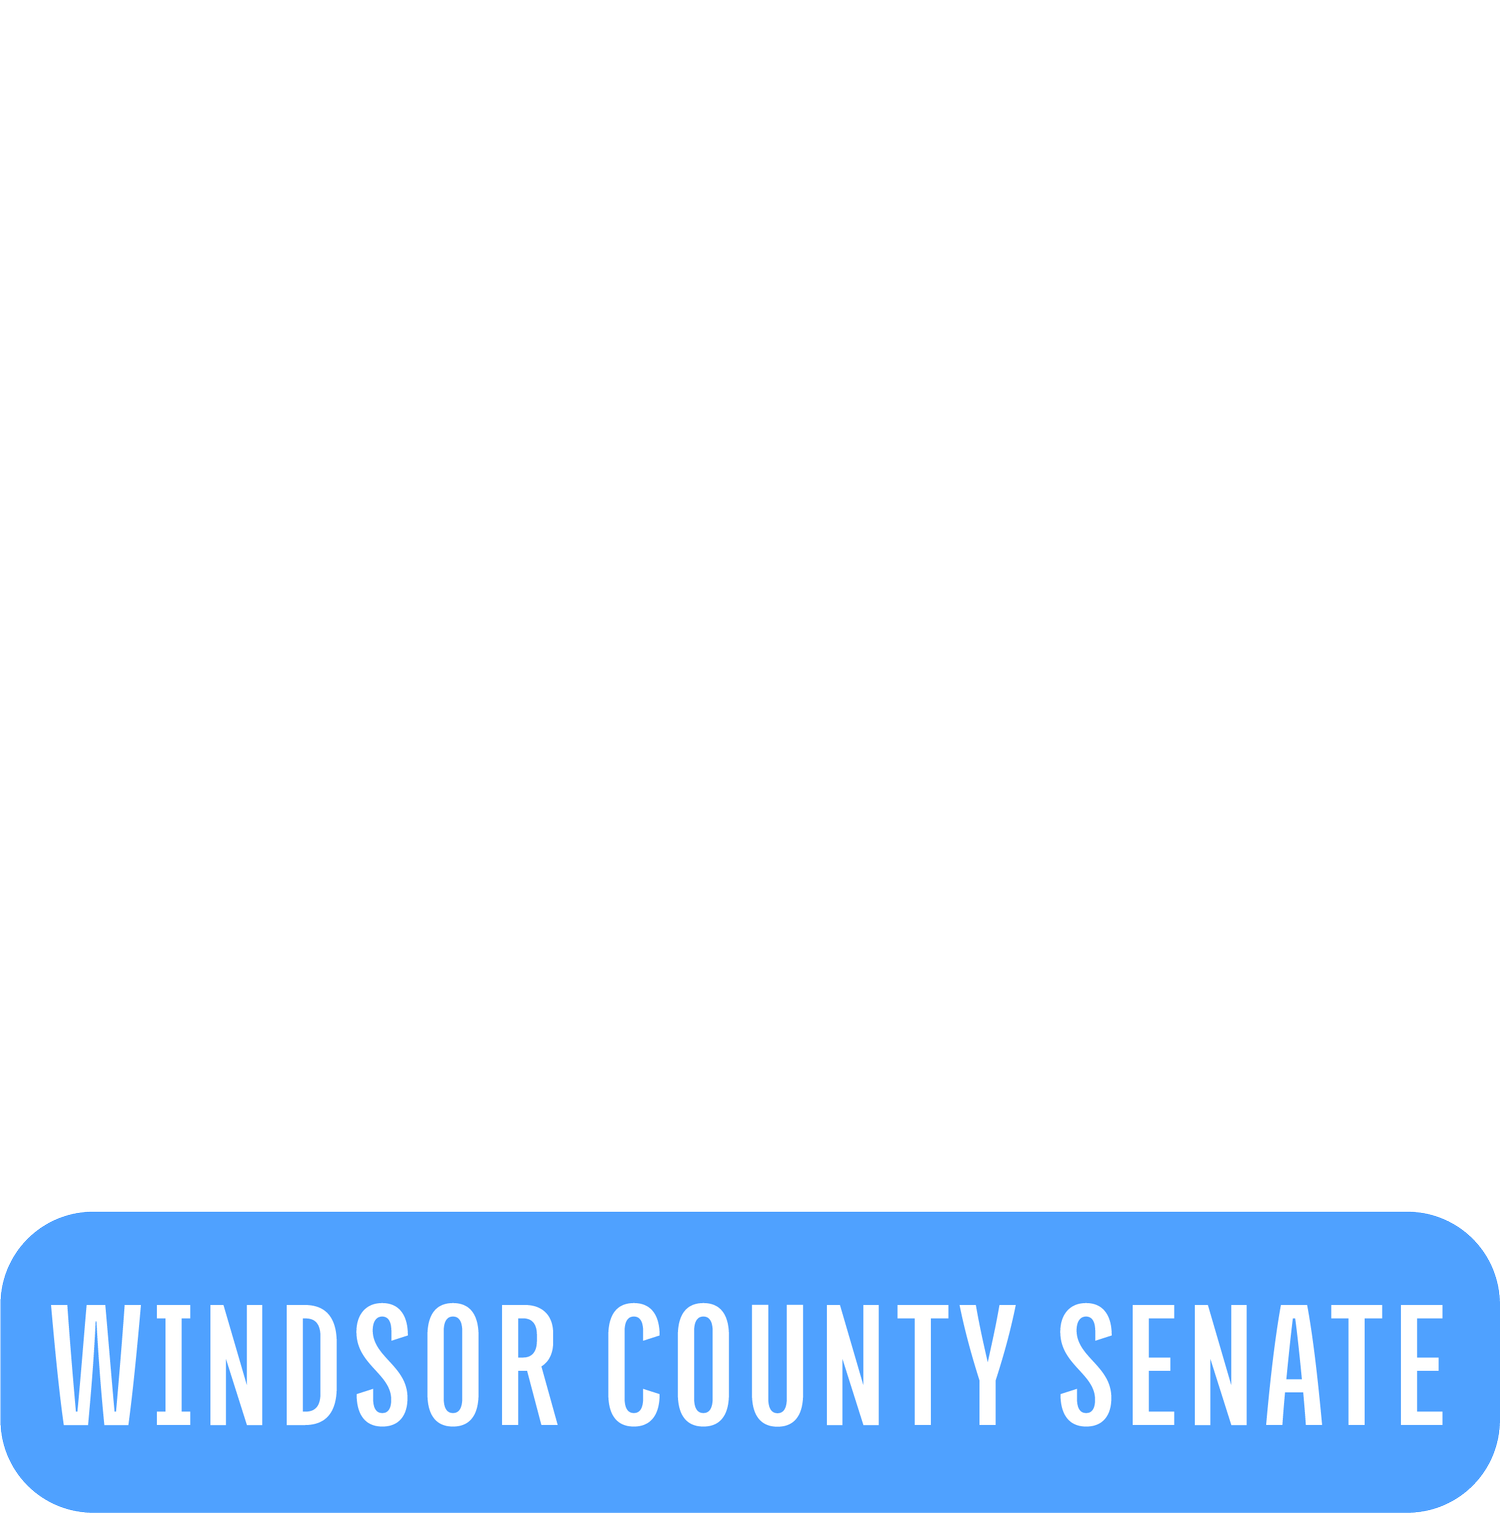 Joe Major for Windsor County Senate